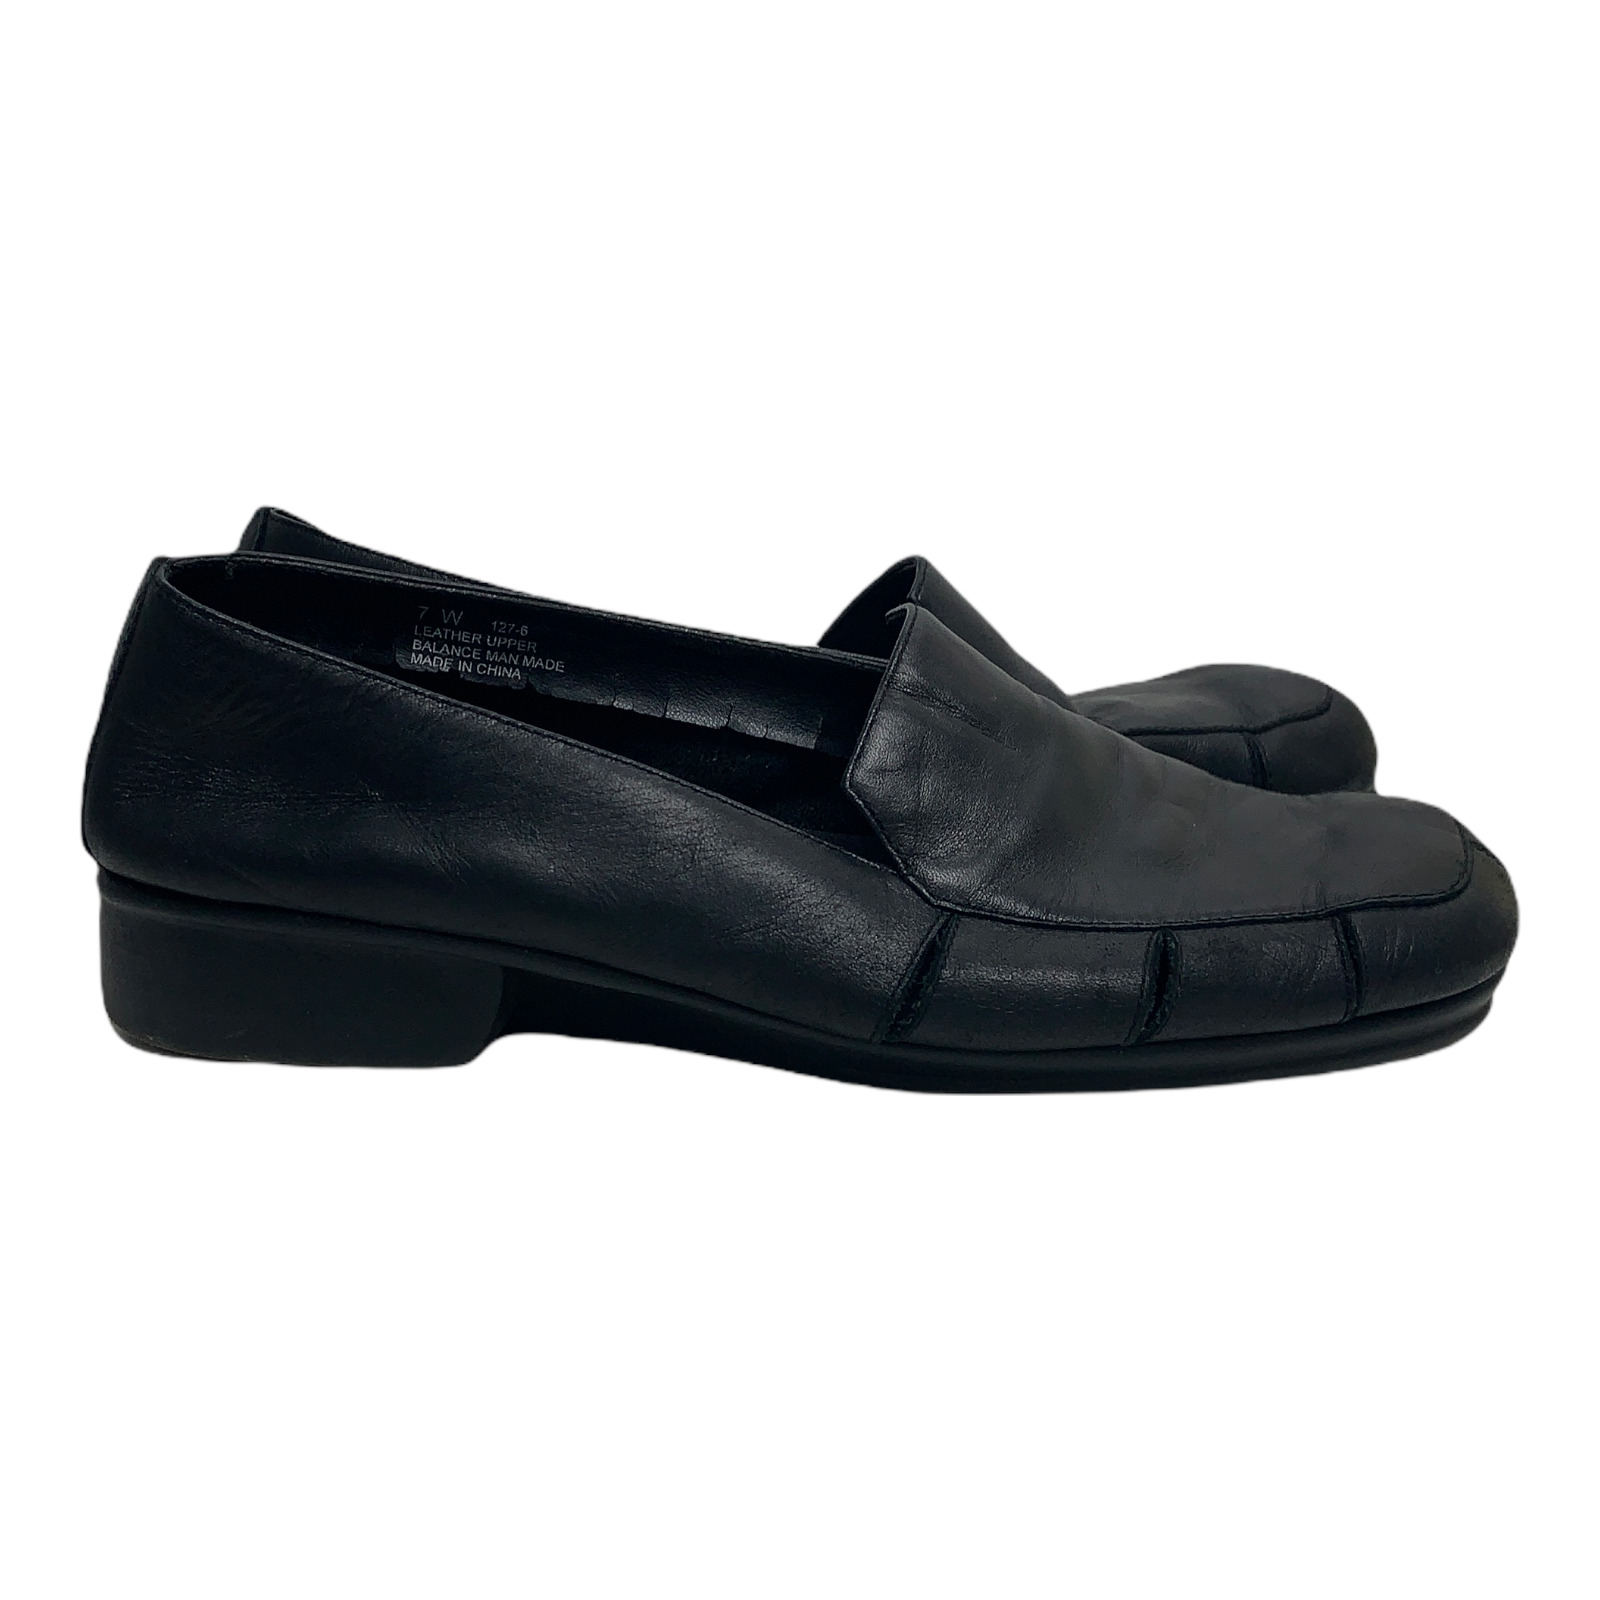 Aerosoles Womens Black Leather Slip On Block Heel Loafers Shoes Size US 7 W